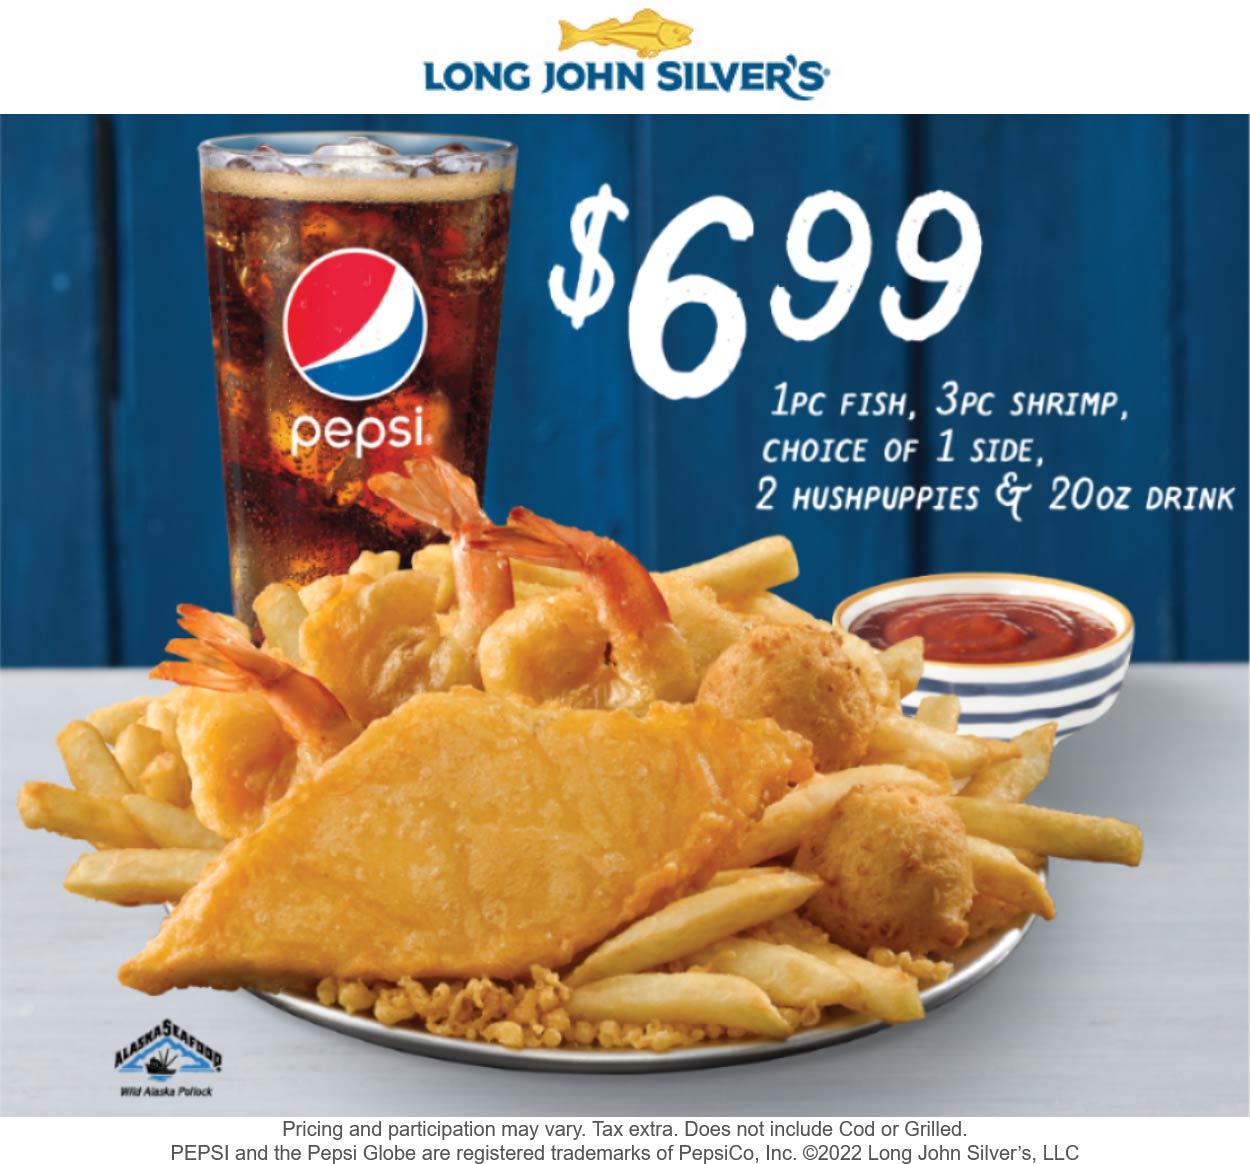 Long John Silvers restaurants Coupon  Fish + shrimp + side + hushpuppies + drink = $7 at Long John Silvers #longjohnsilvers 